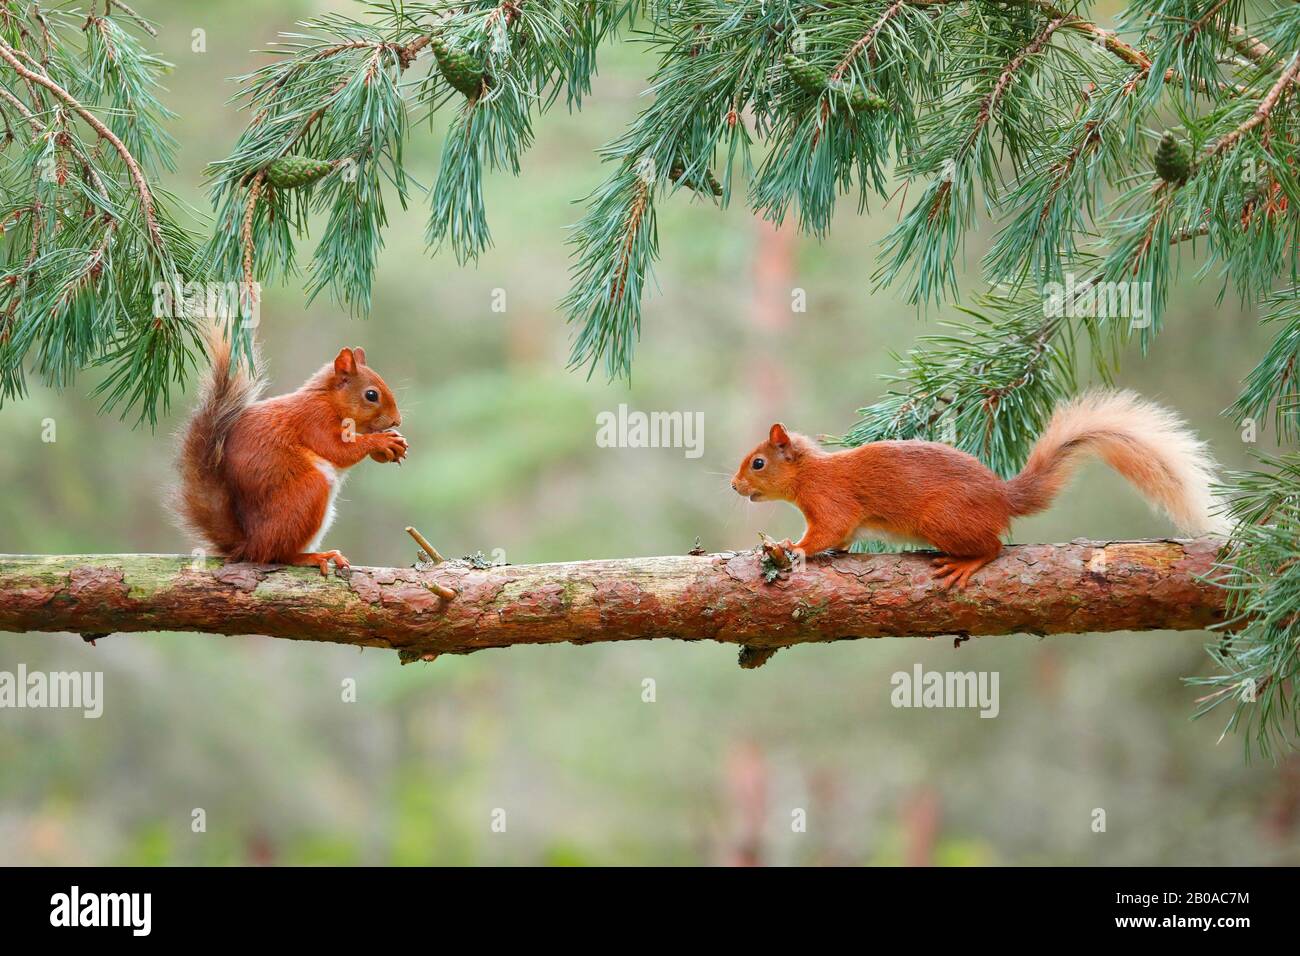 European red squirrel, Eurasian red squirrel (Sciurus vulgaris), two red squirrels together on a pine branch, Switzerland Stock Photo